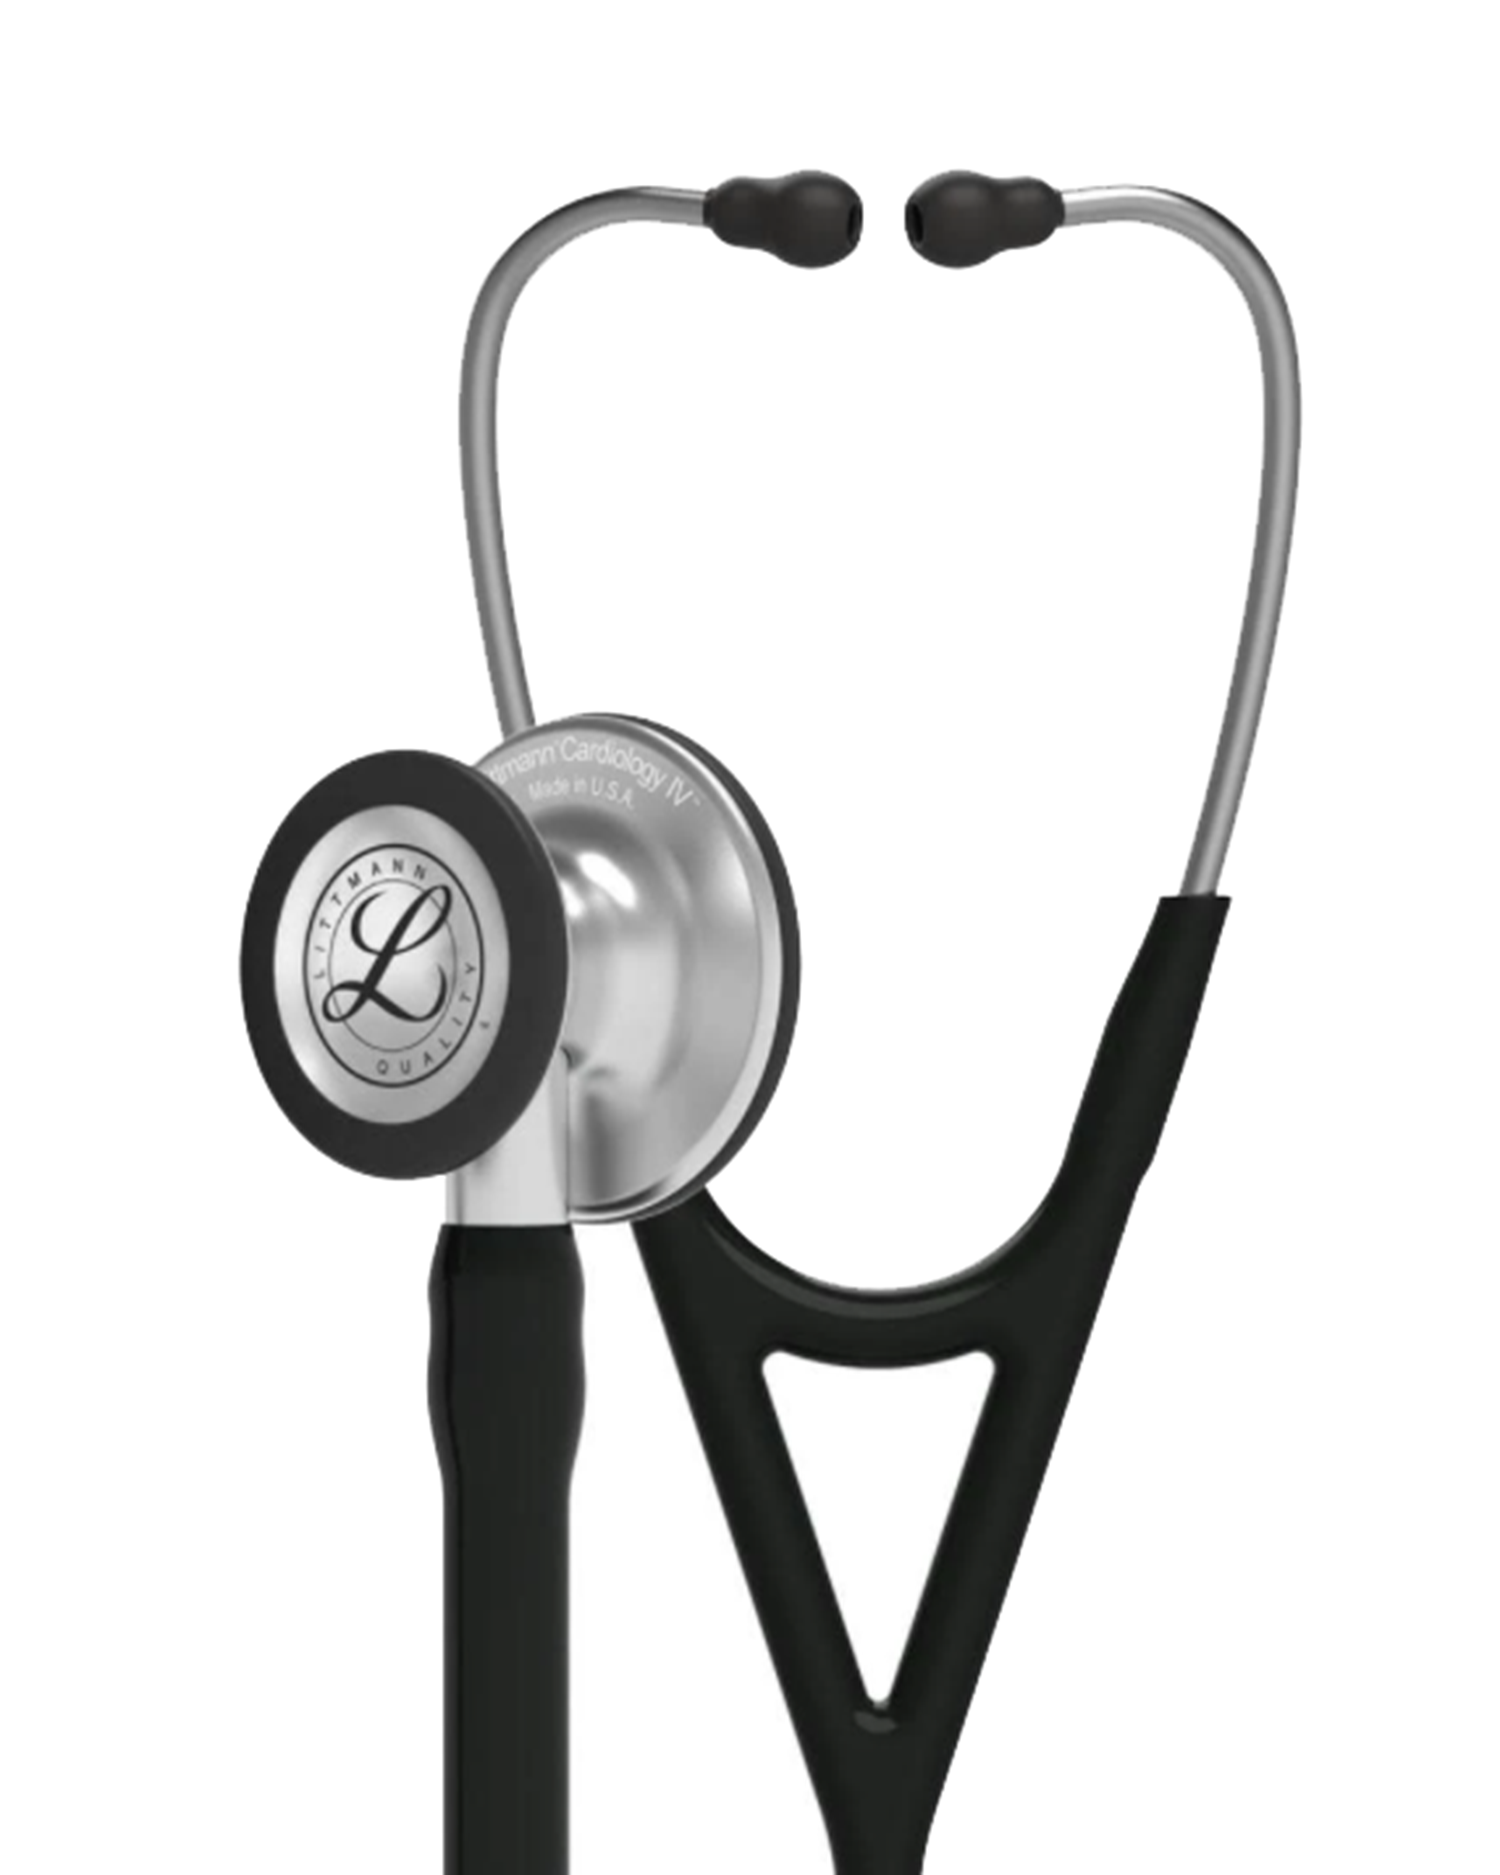 Stethoscope, Medical Diagnosis, Cardiology & Acoustics